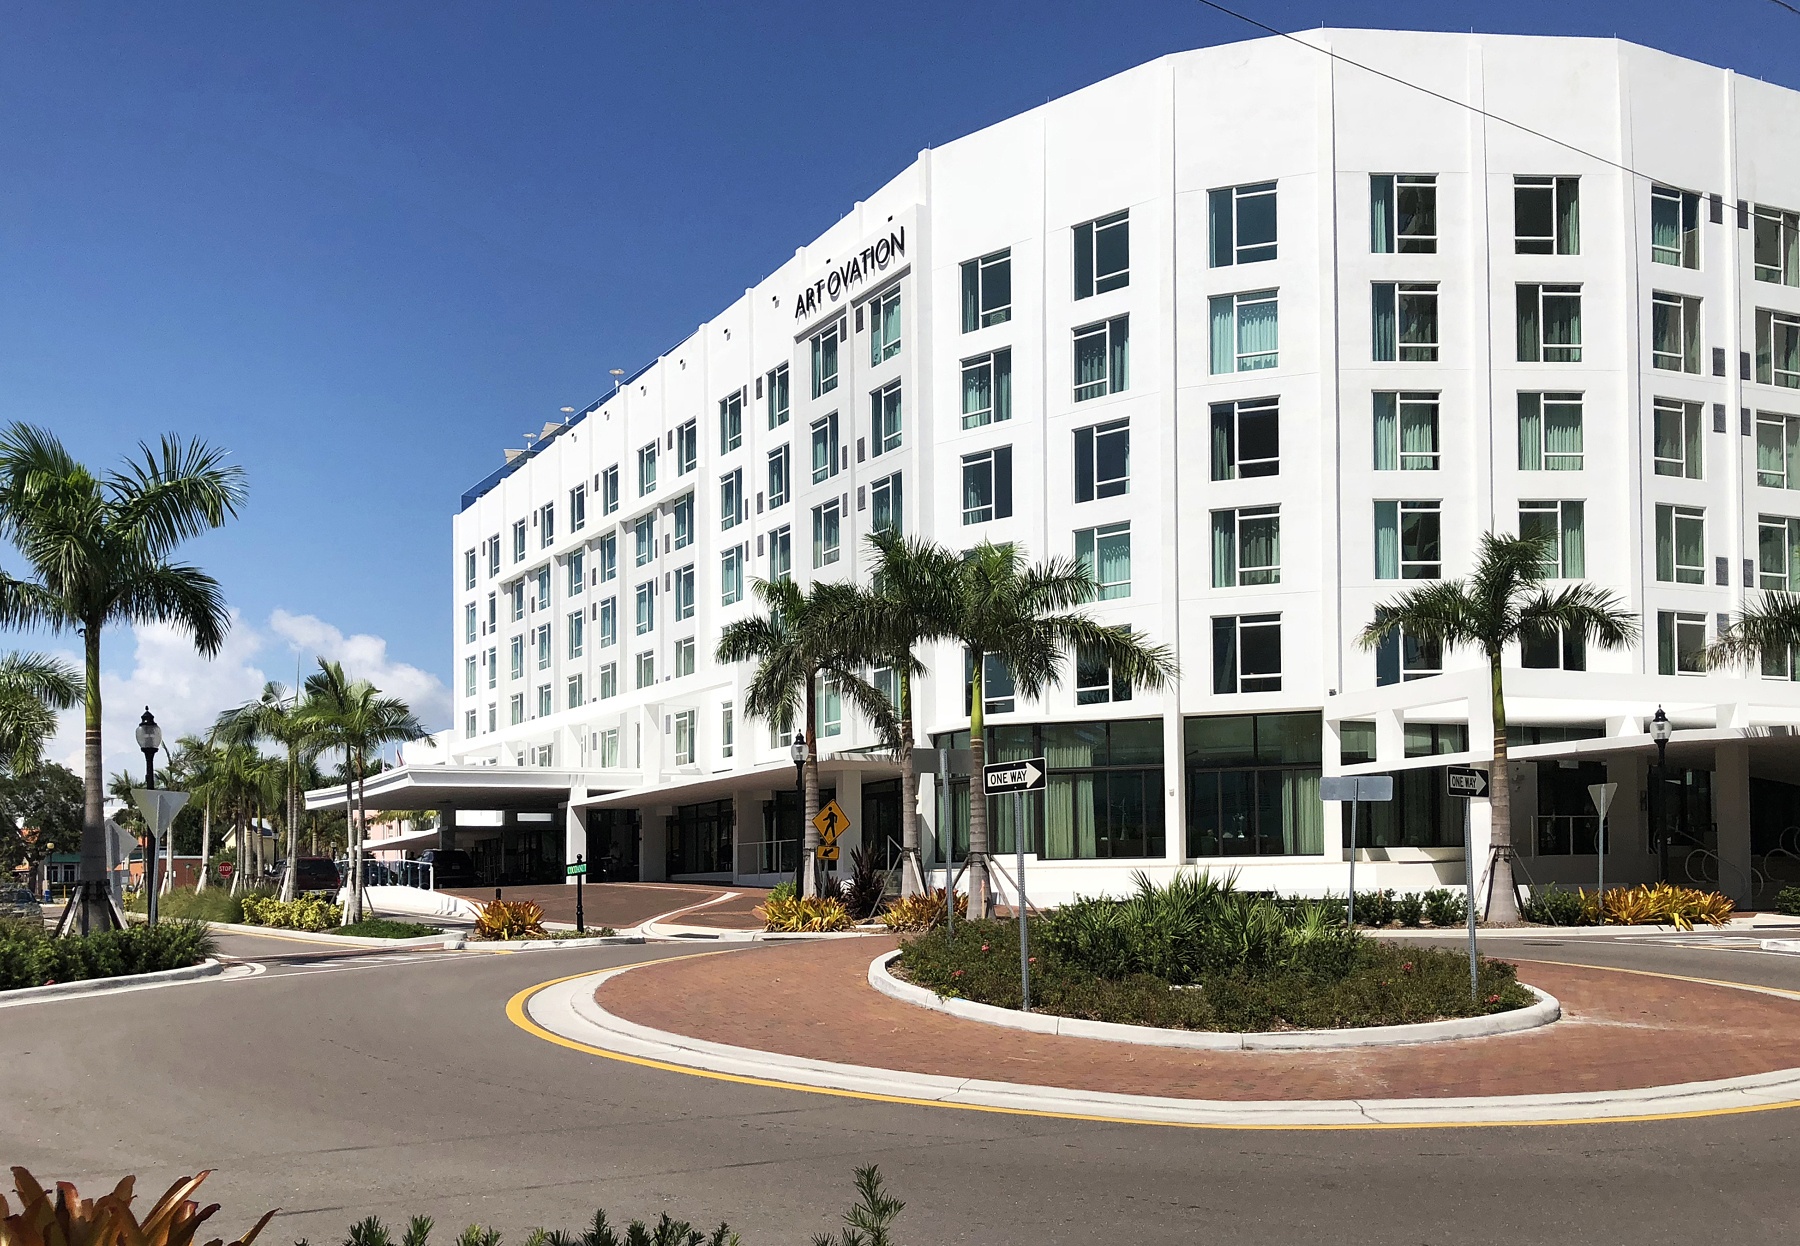 Art Ovation Hotel in Sarasota, FL: Encore-Worthy Accommodations